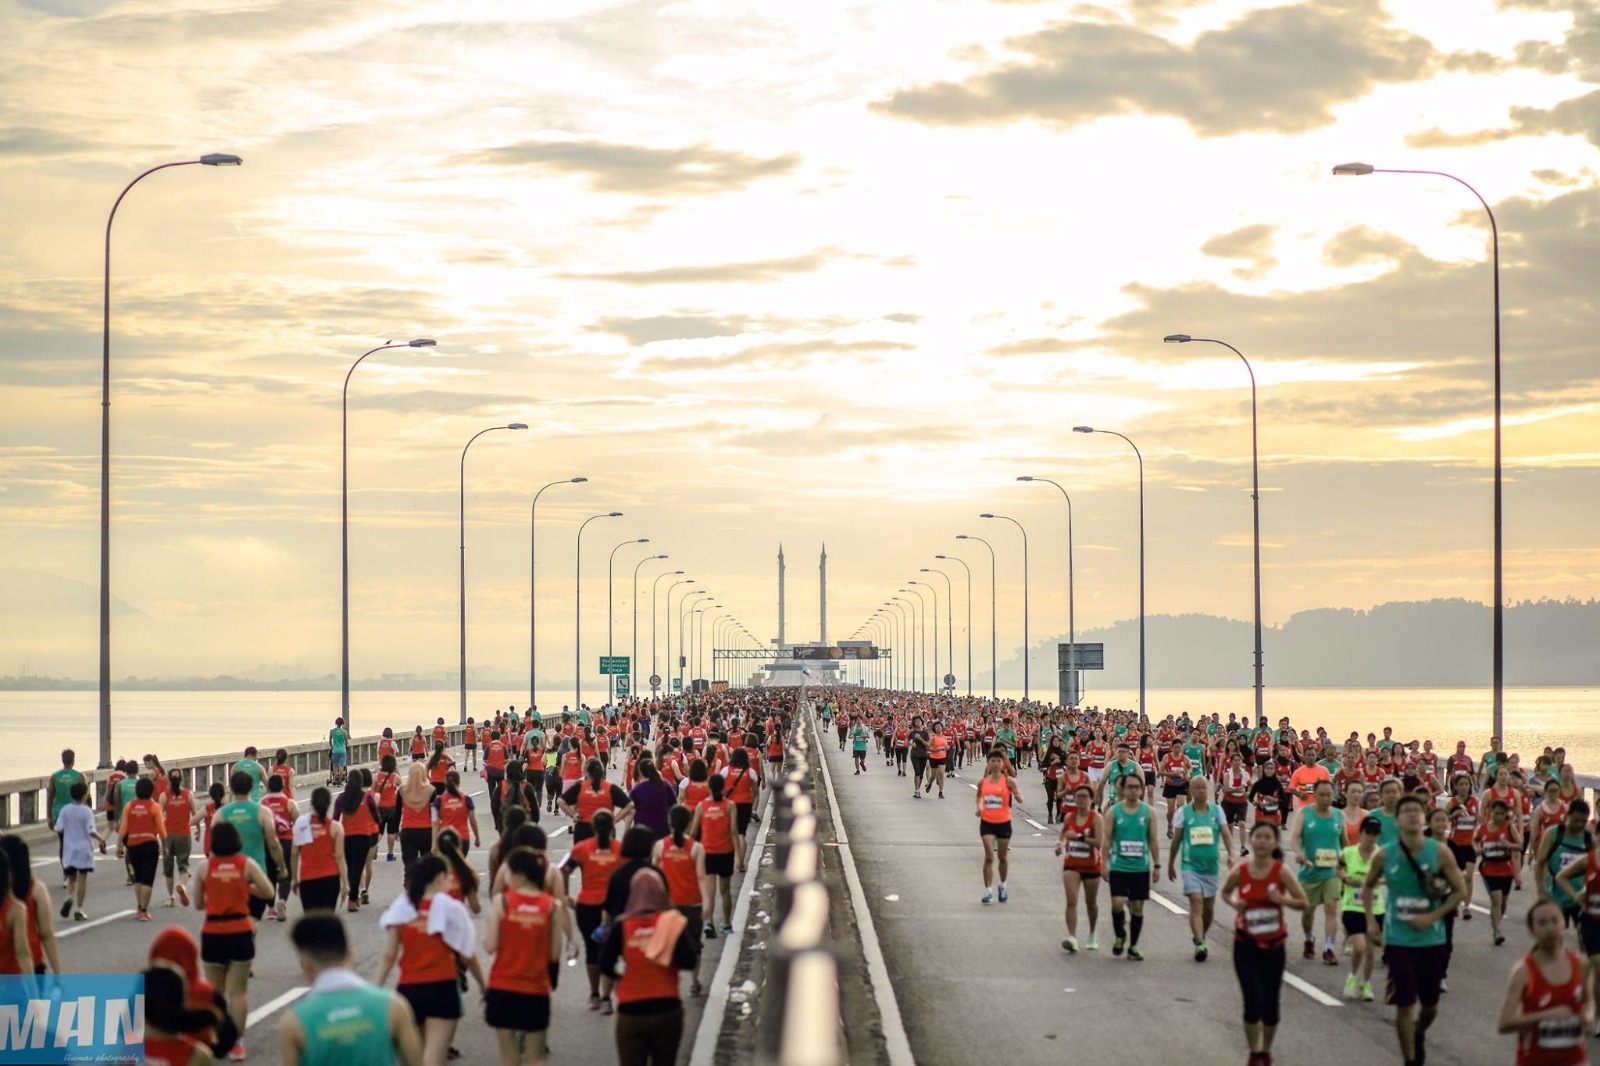 Photo Credit: Asics Penang Bridge International Marathon